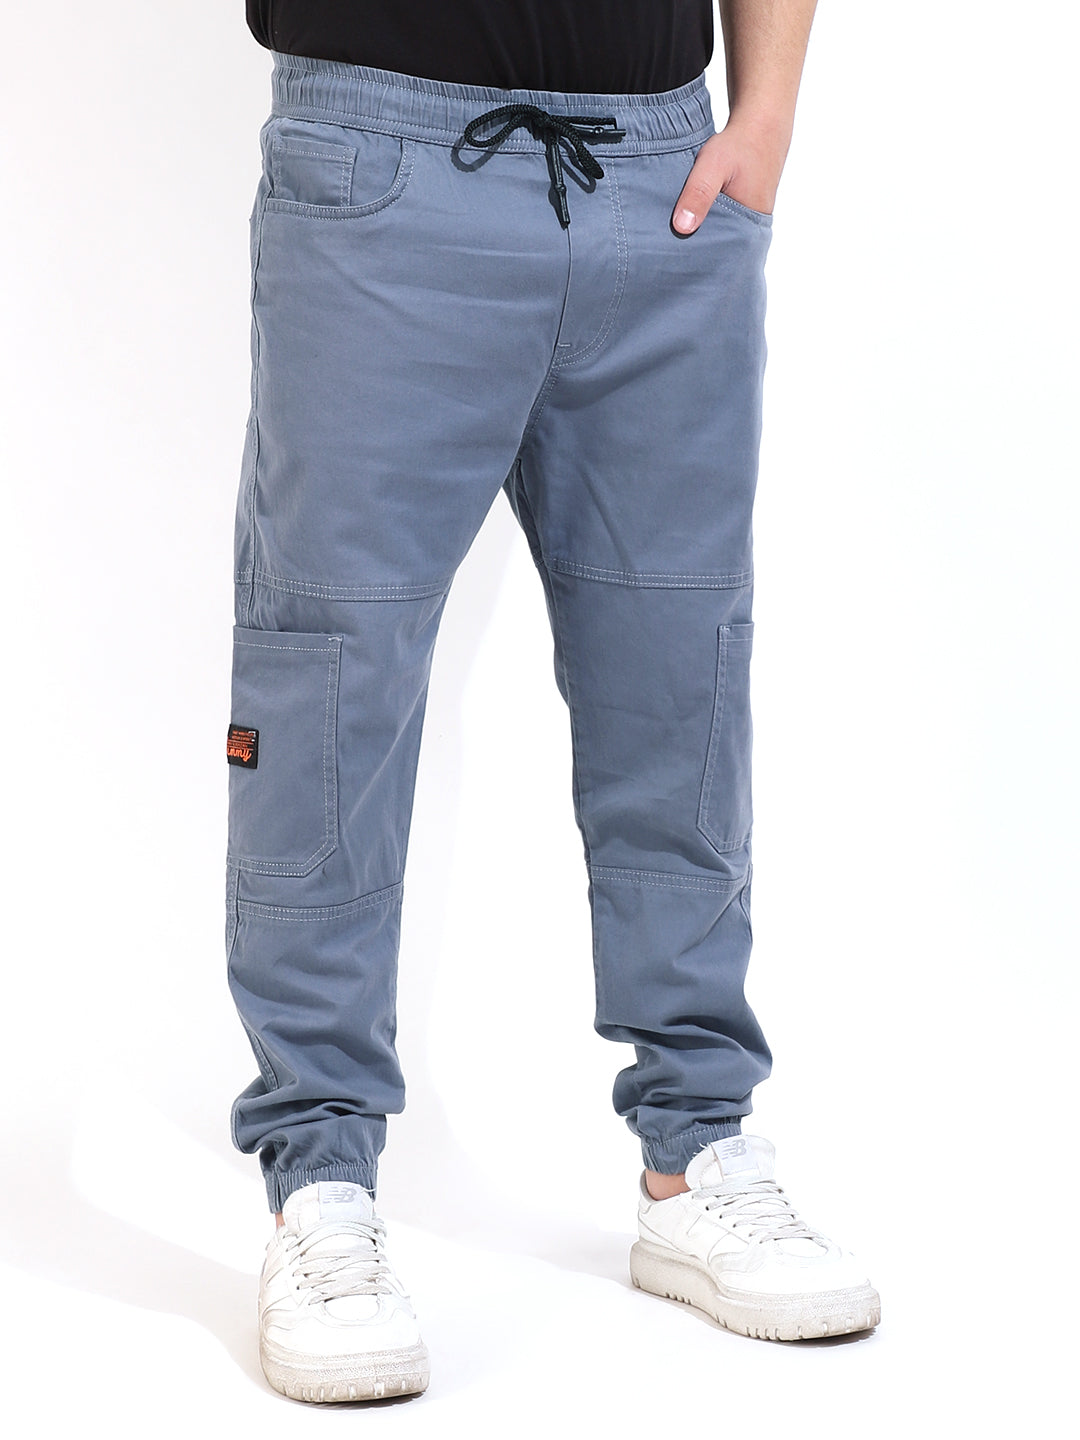 Buy Devil Boy's Denim Cargo 8 Pocket Jogger Jeans (Blue,34) at Amazon.in